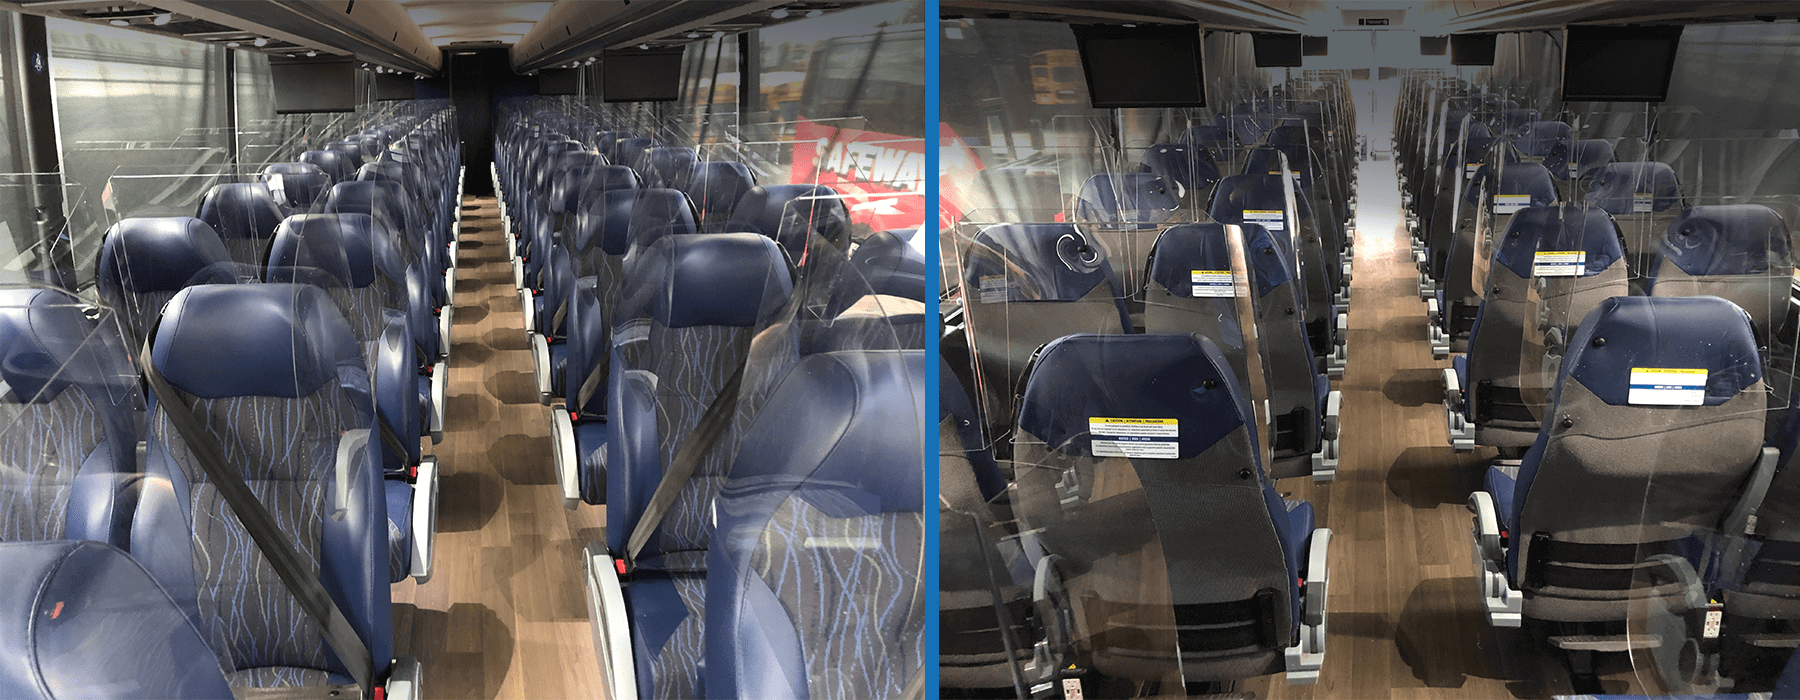 COVID PPE Coach Bus Interior